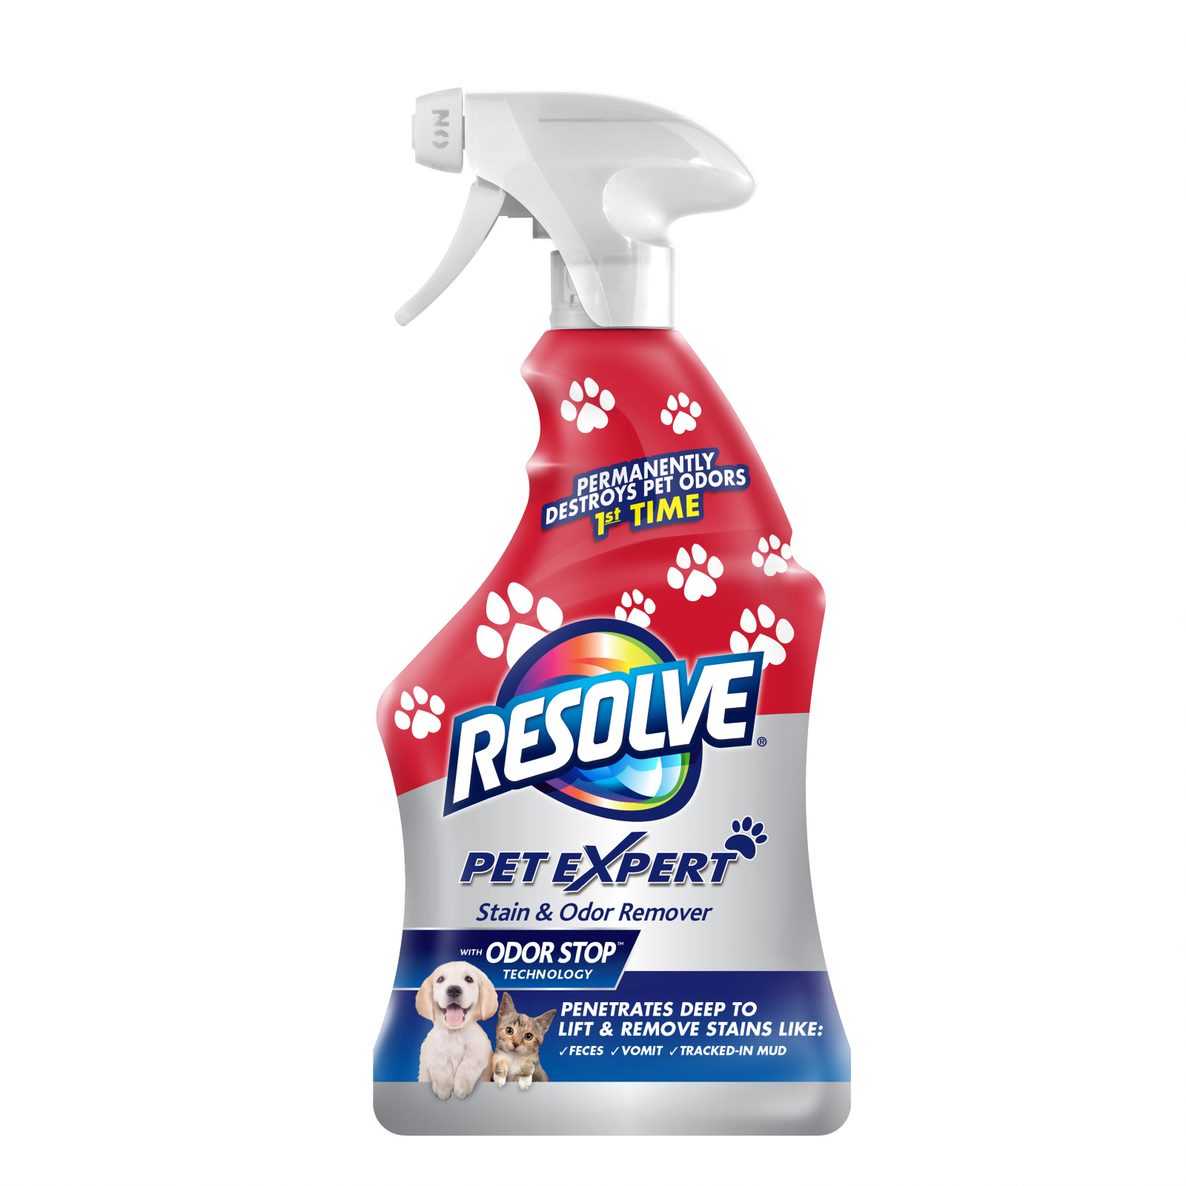 Resolve Pet Expert Stain & Odor Remover